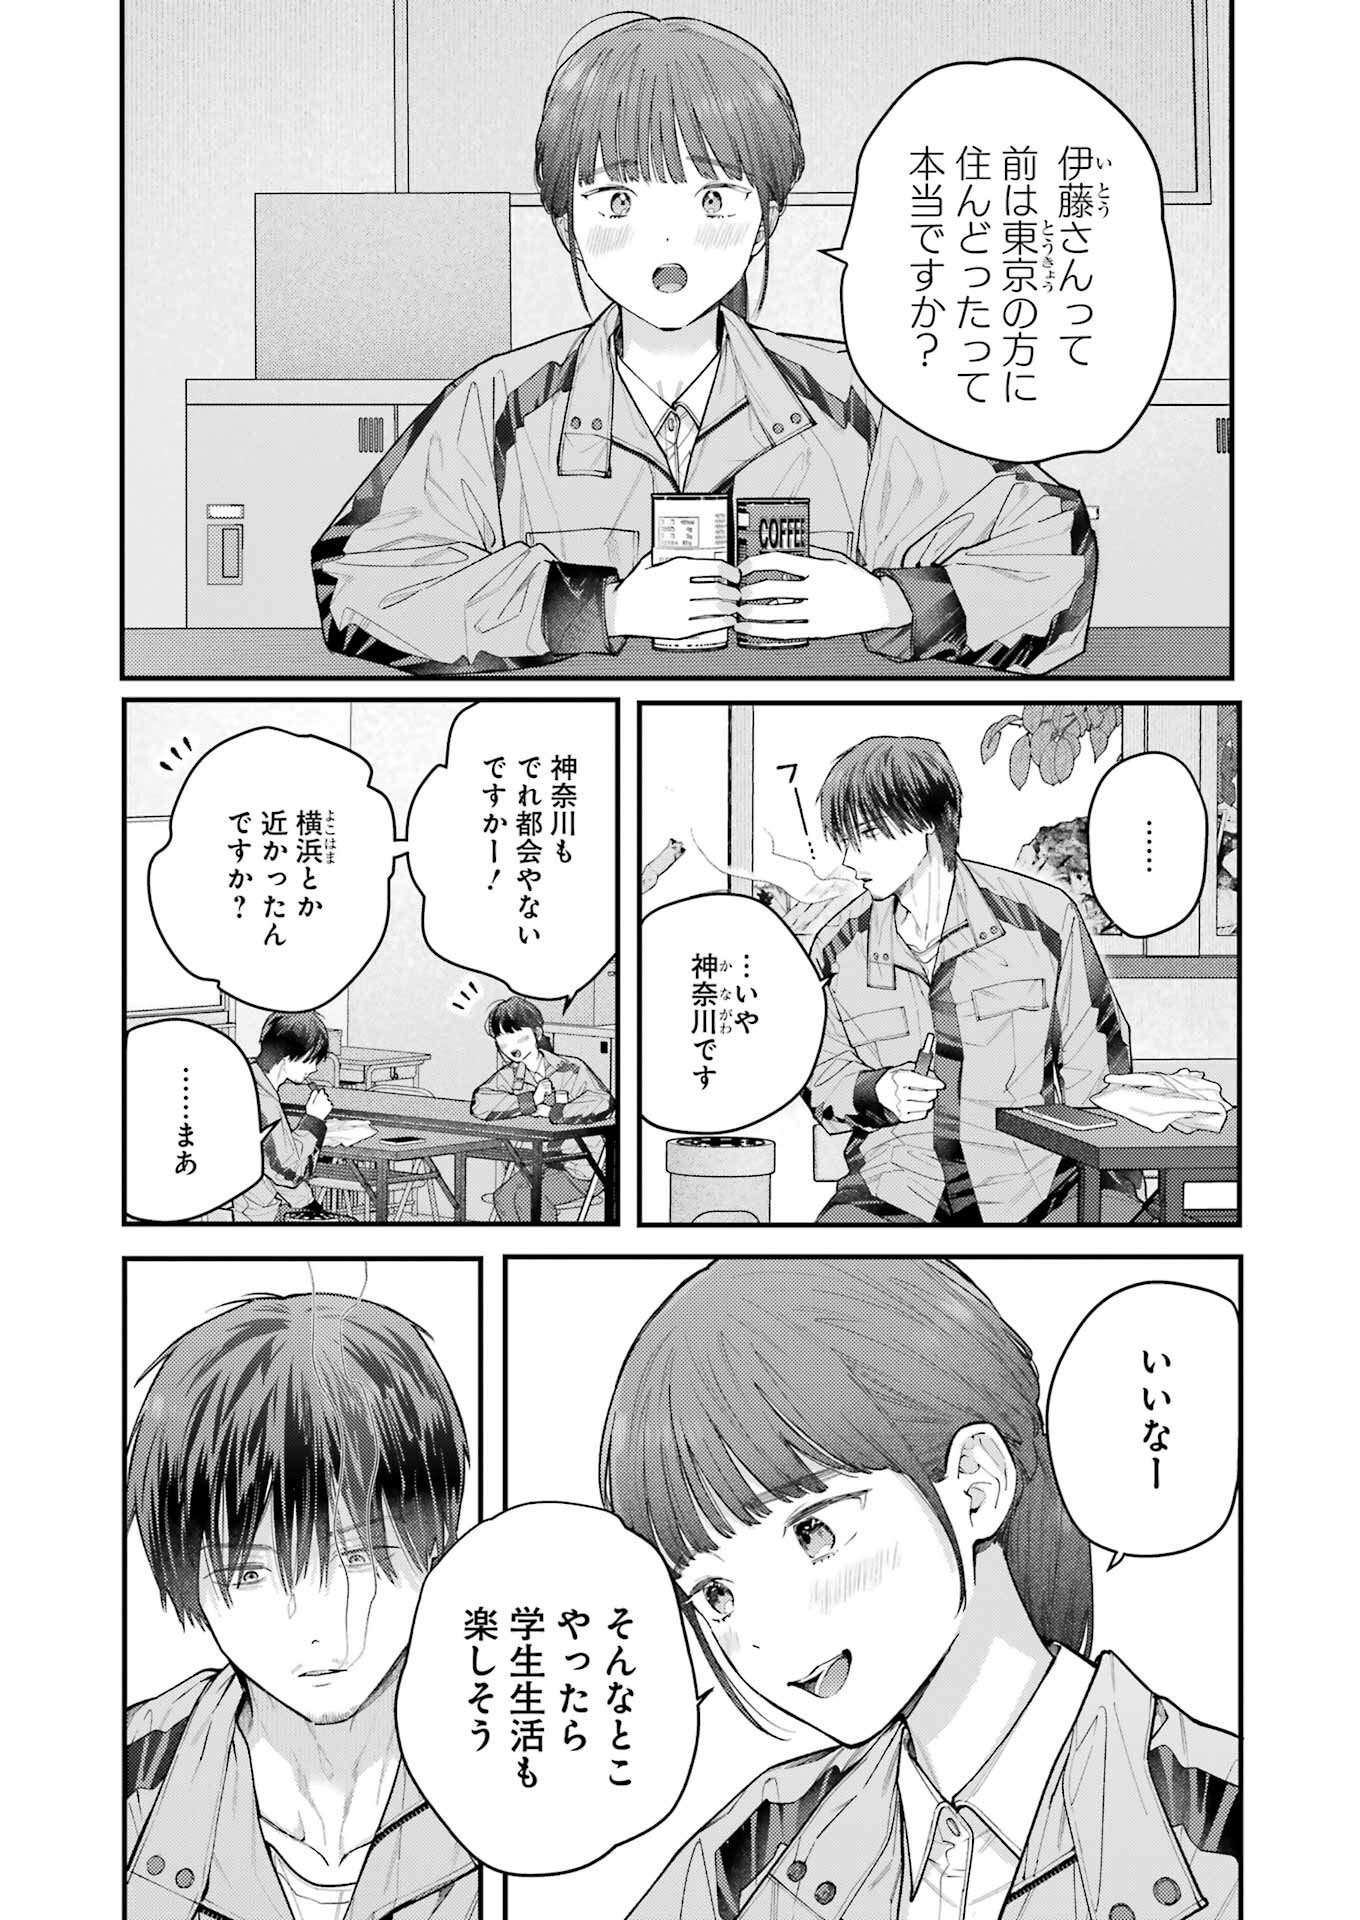 Jigoku ni Ochite yo, Onii-chan - Chapter 29 - Page 3